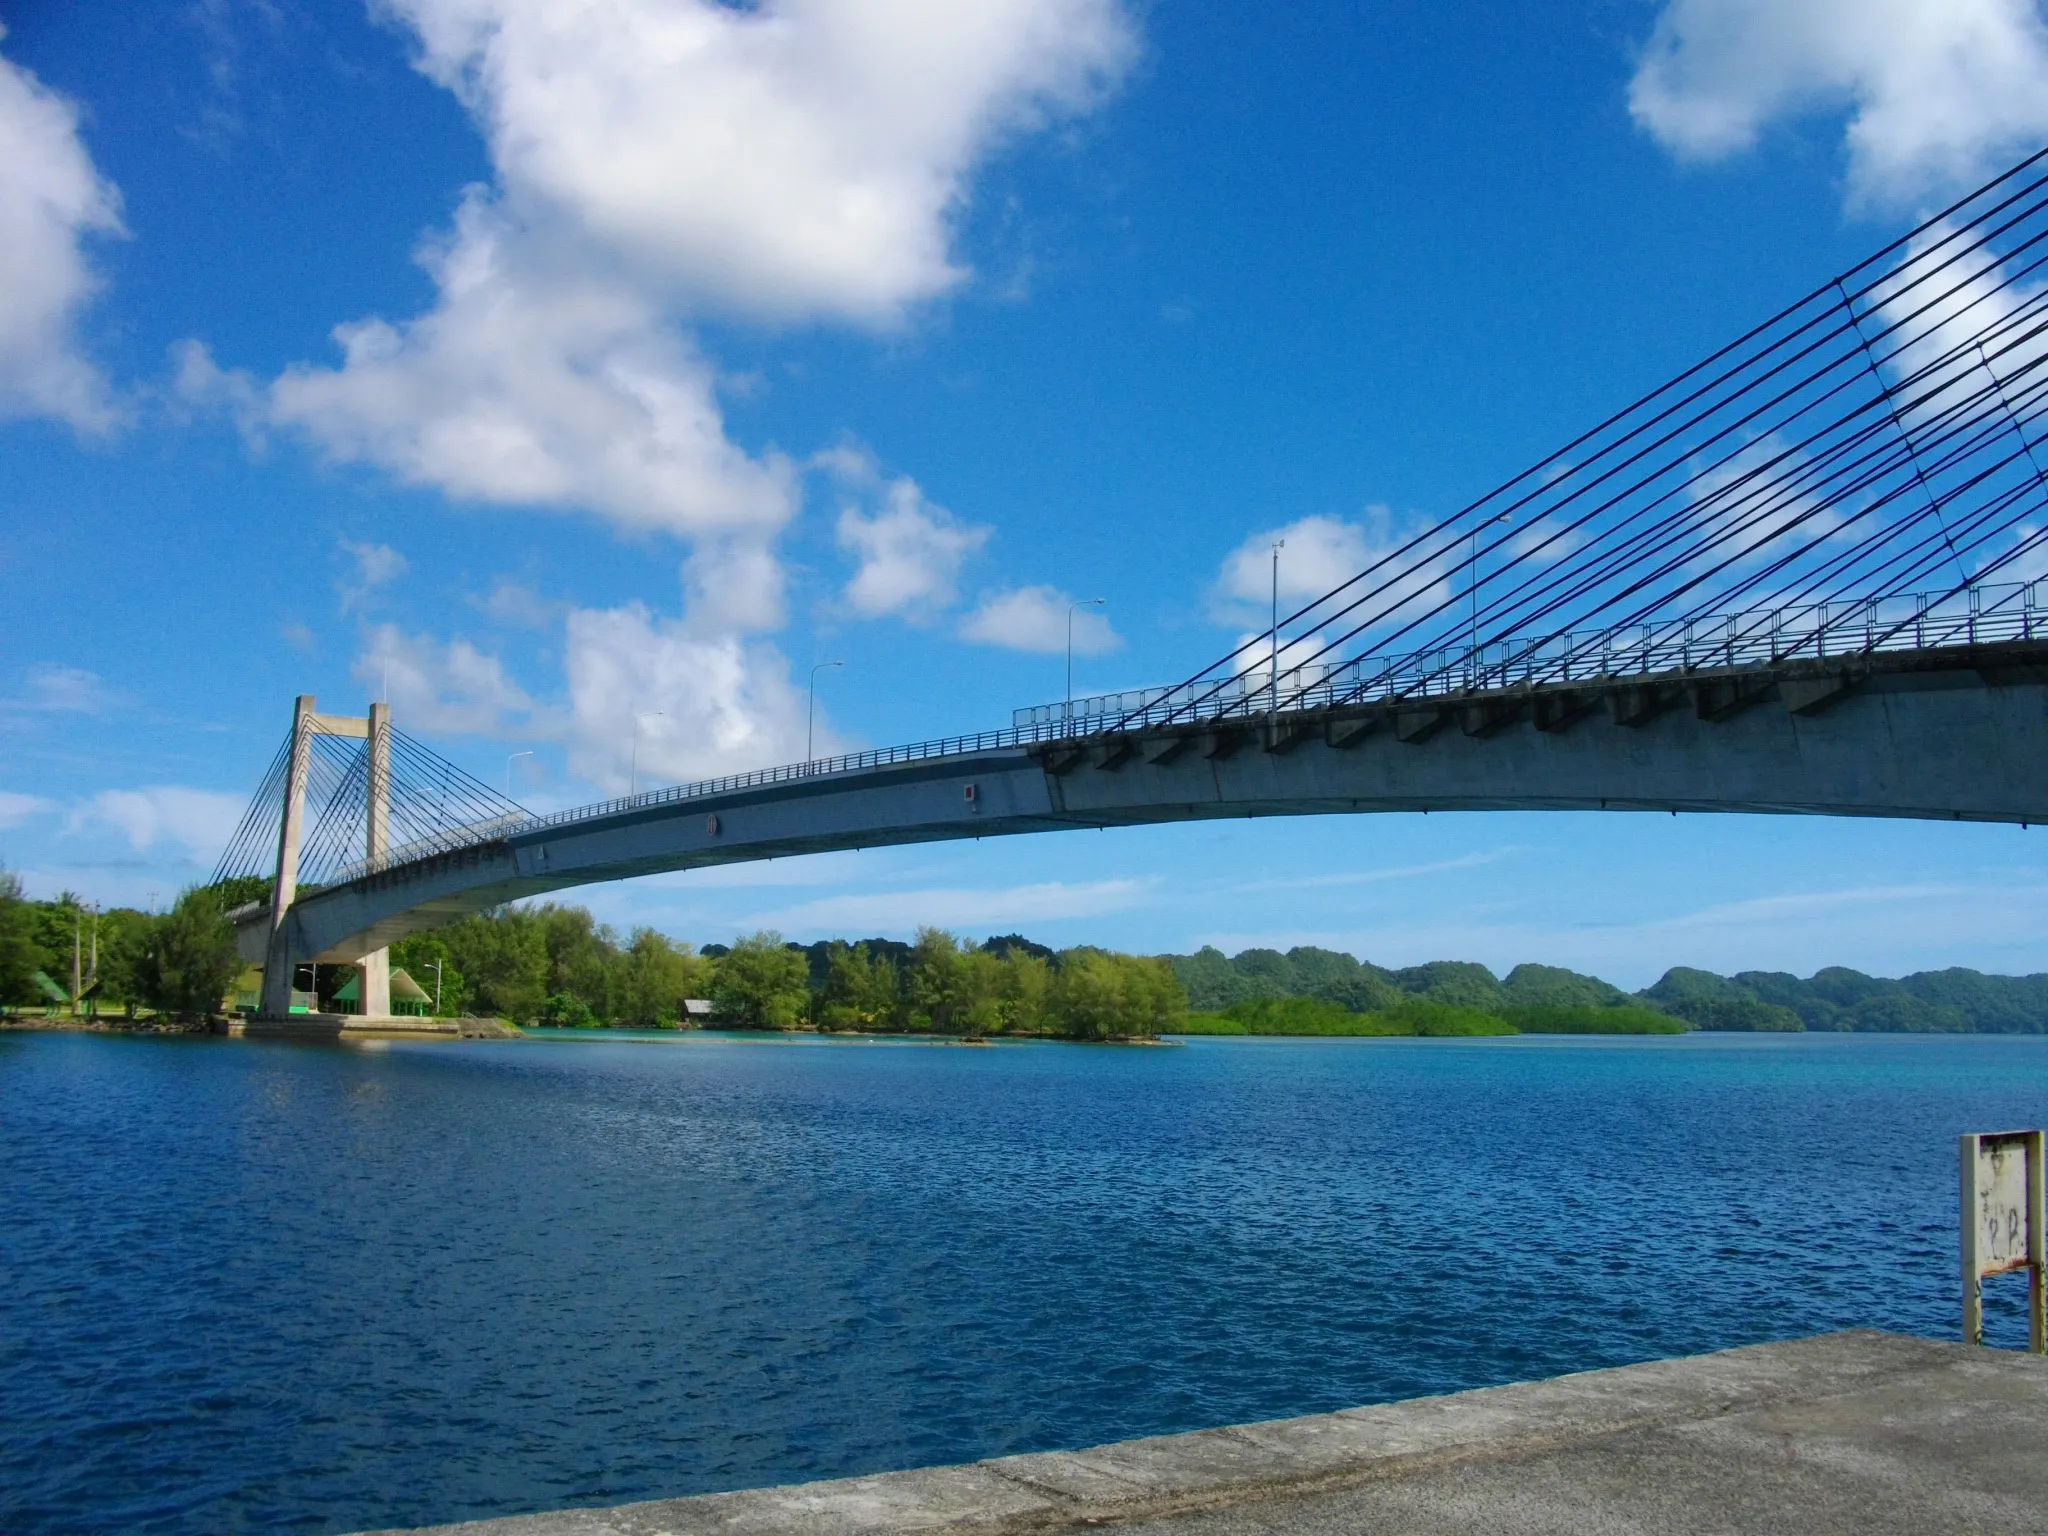 Japan-Palau Friendship Bridge in Palau, Australia and Oceania | Architecture - Rated 0.8